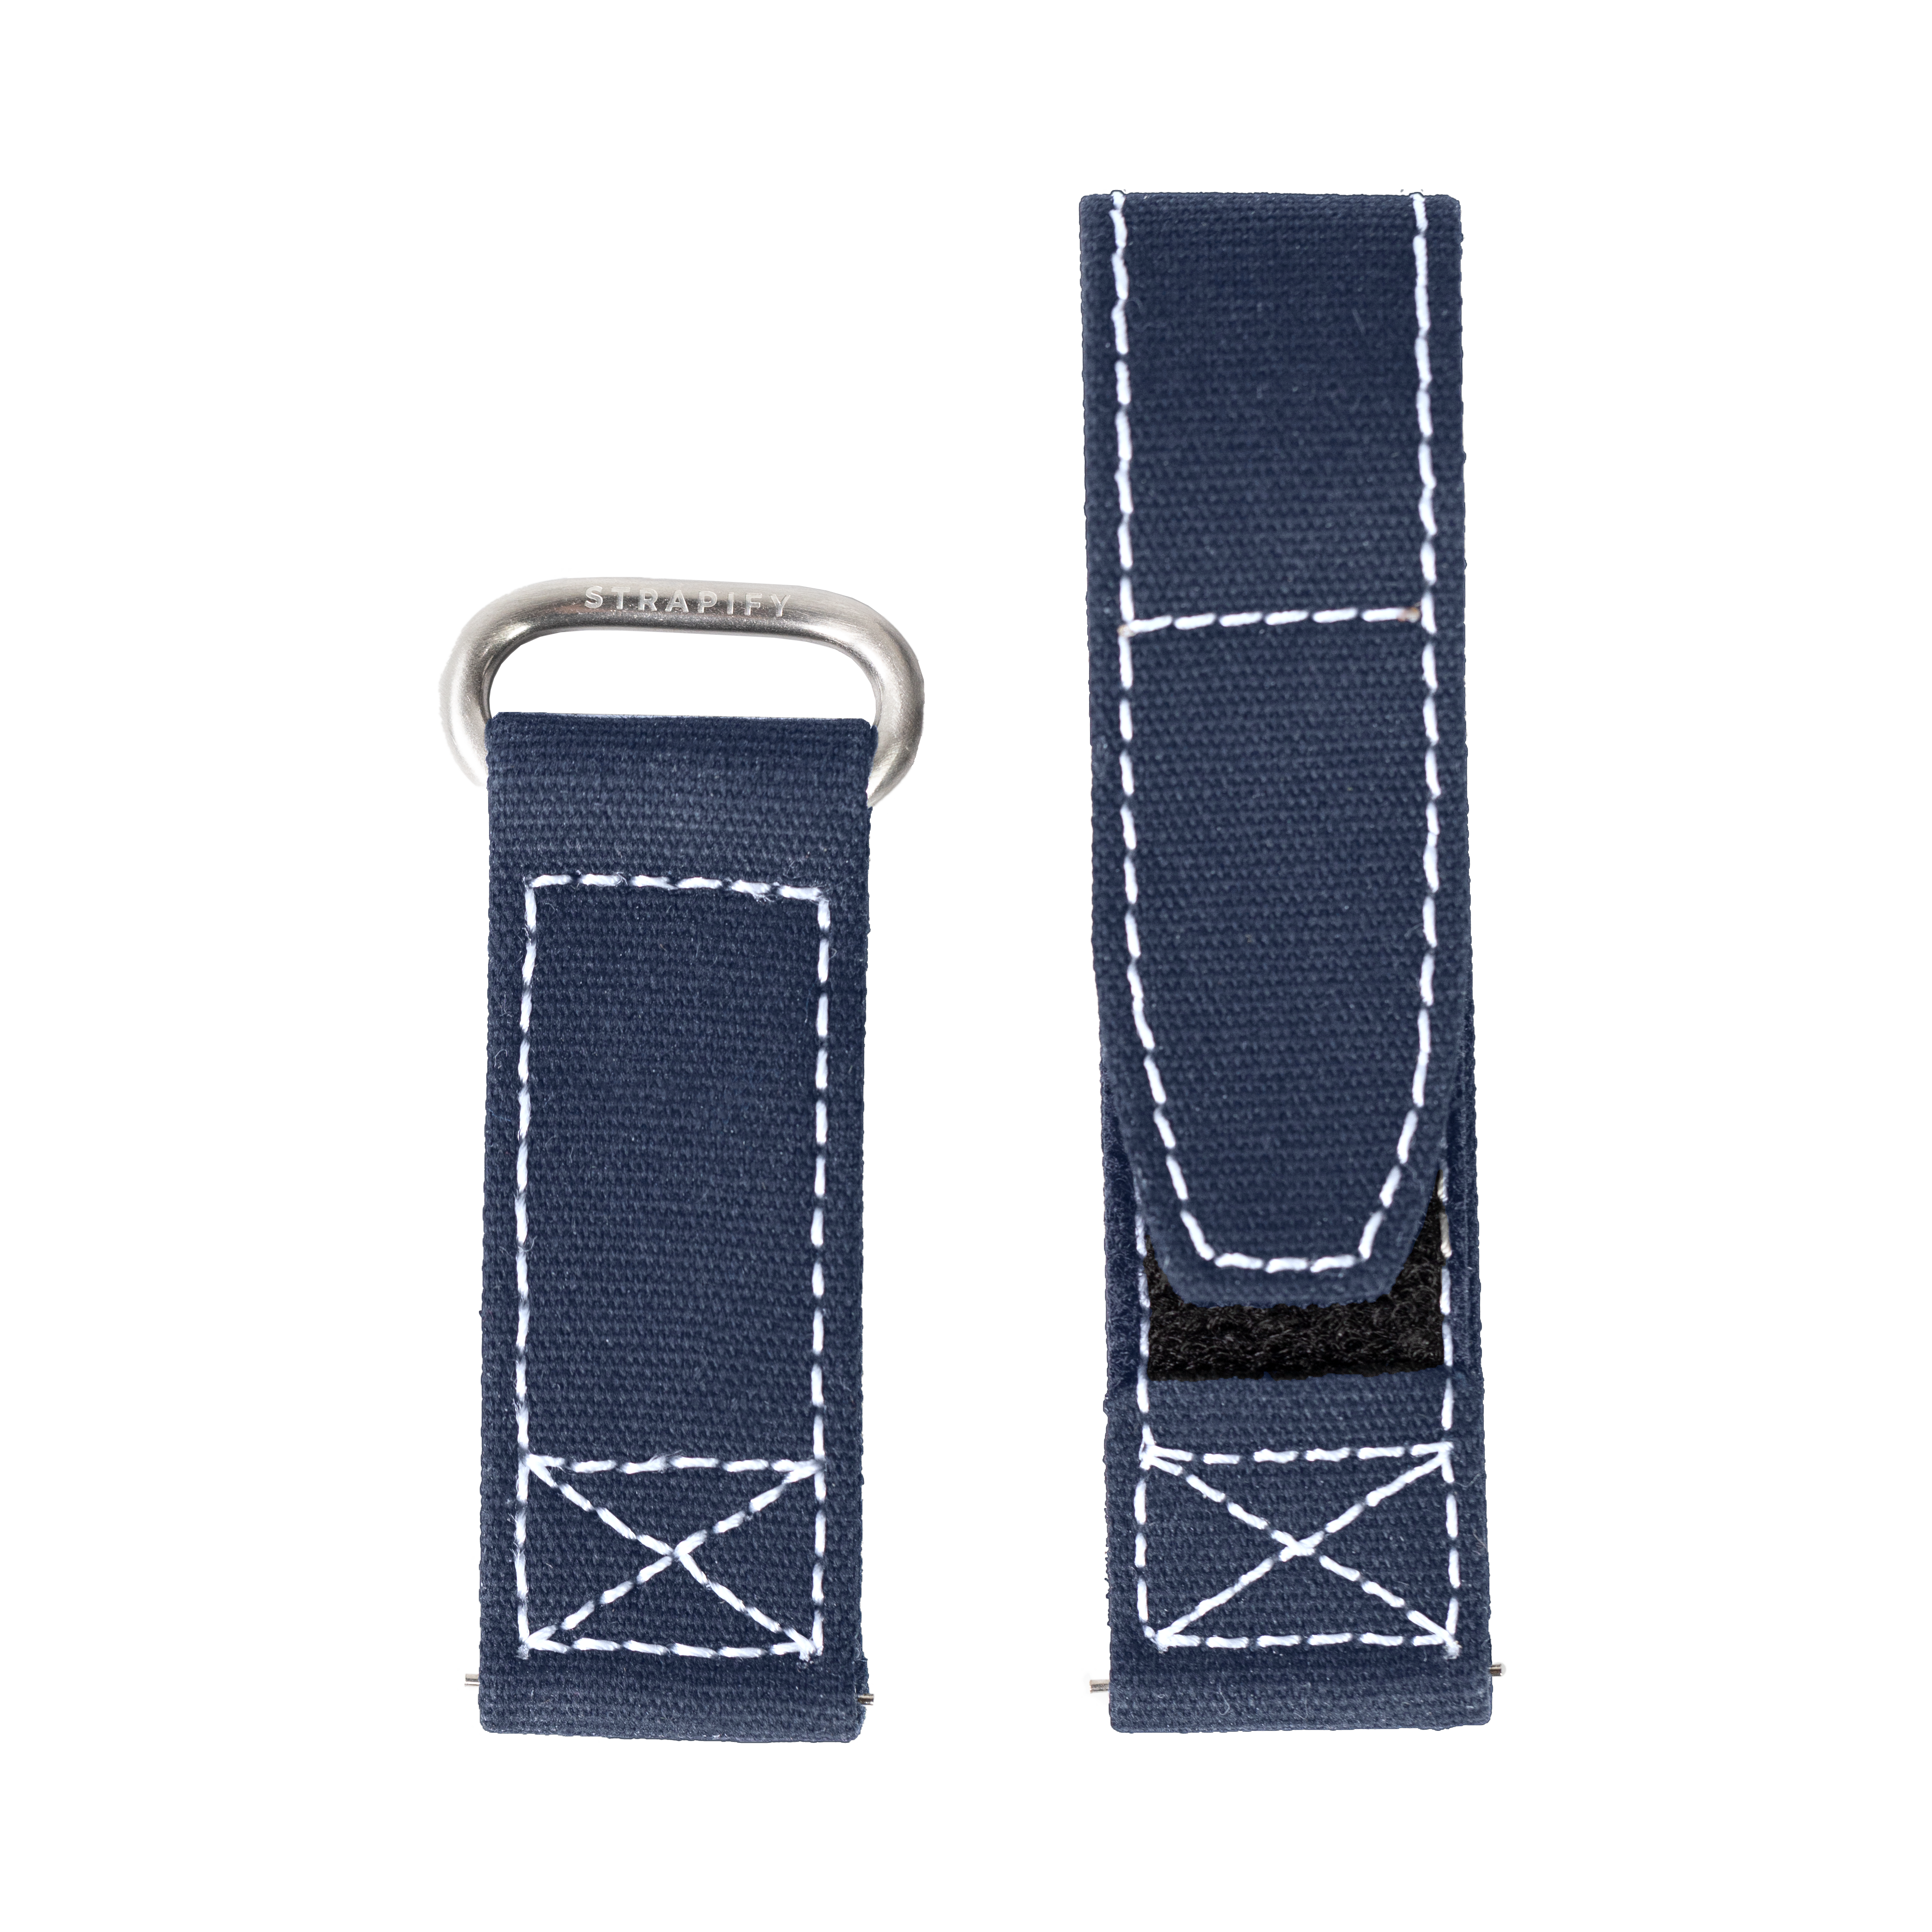 [Apple Watch] Military Velcro - Navy Blue | White Stitching